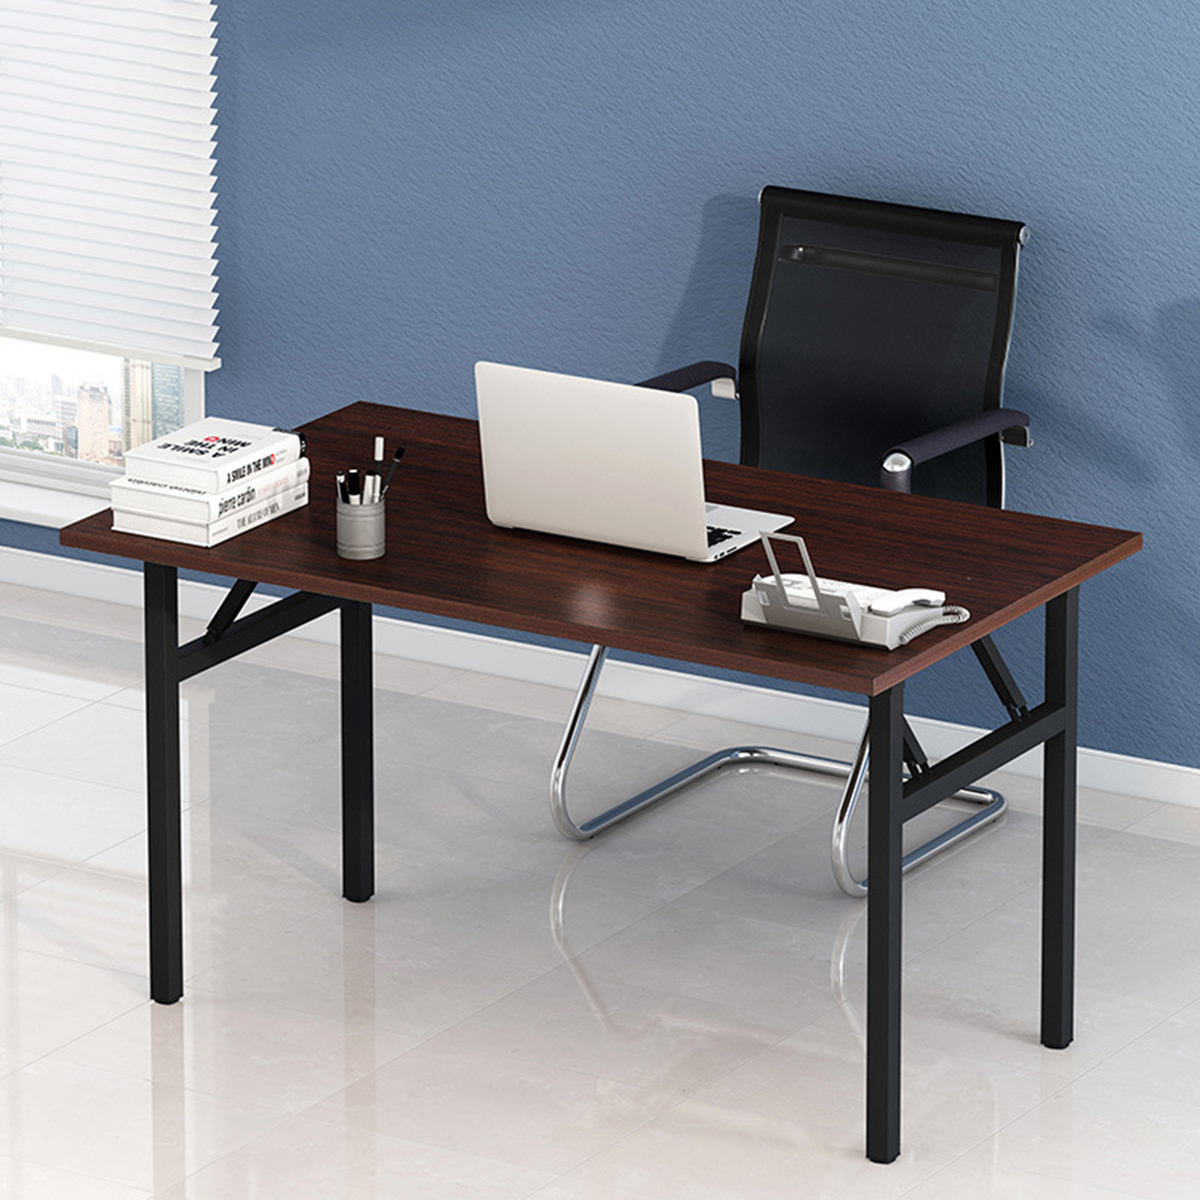 Foldable-Computer-Laptop-Desk-Writing-Study-Table-Desktop-Workstation-Home-Office-Furniture-1750804-6